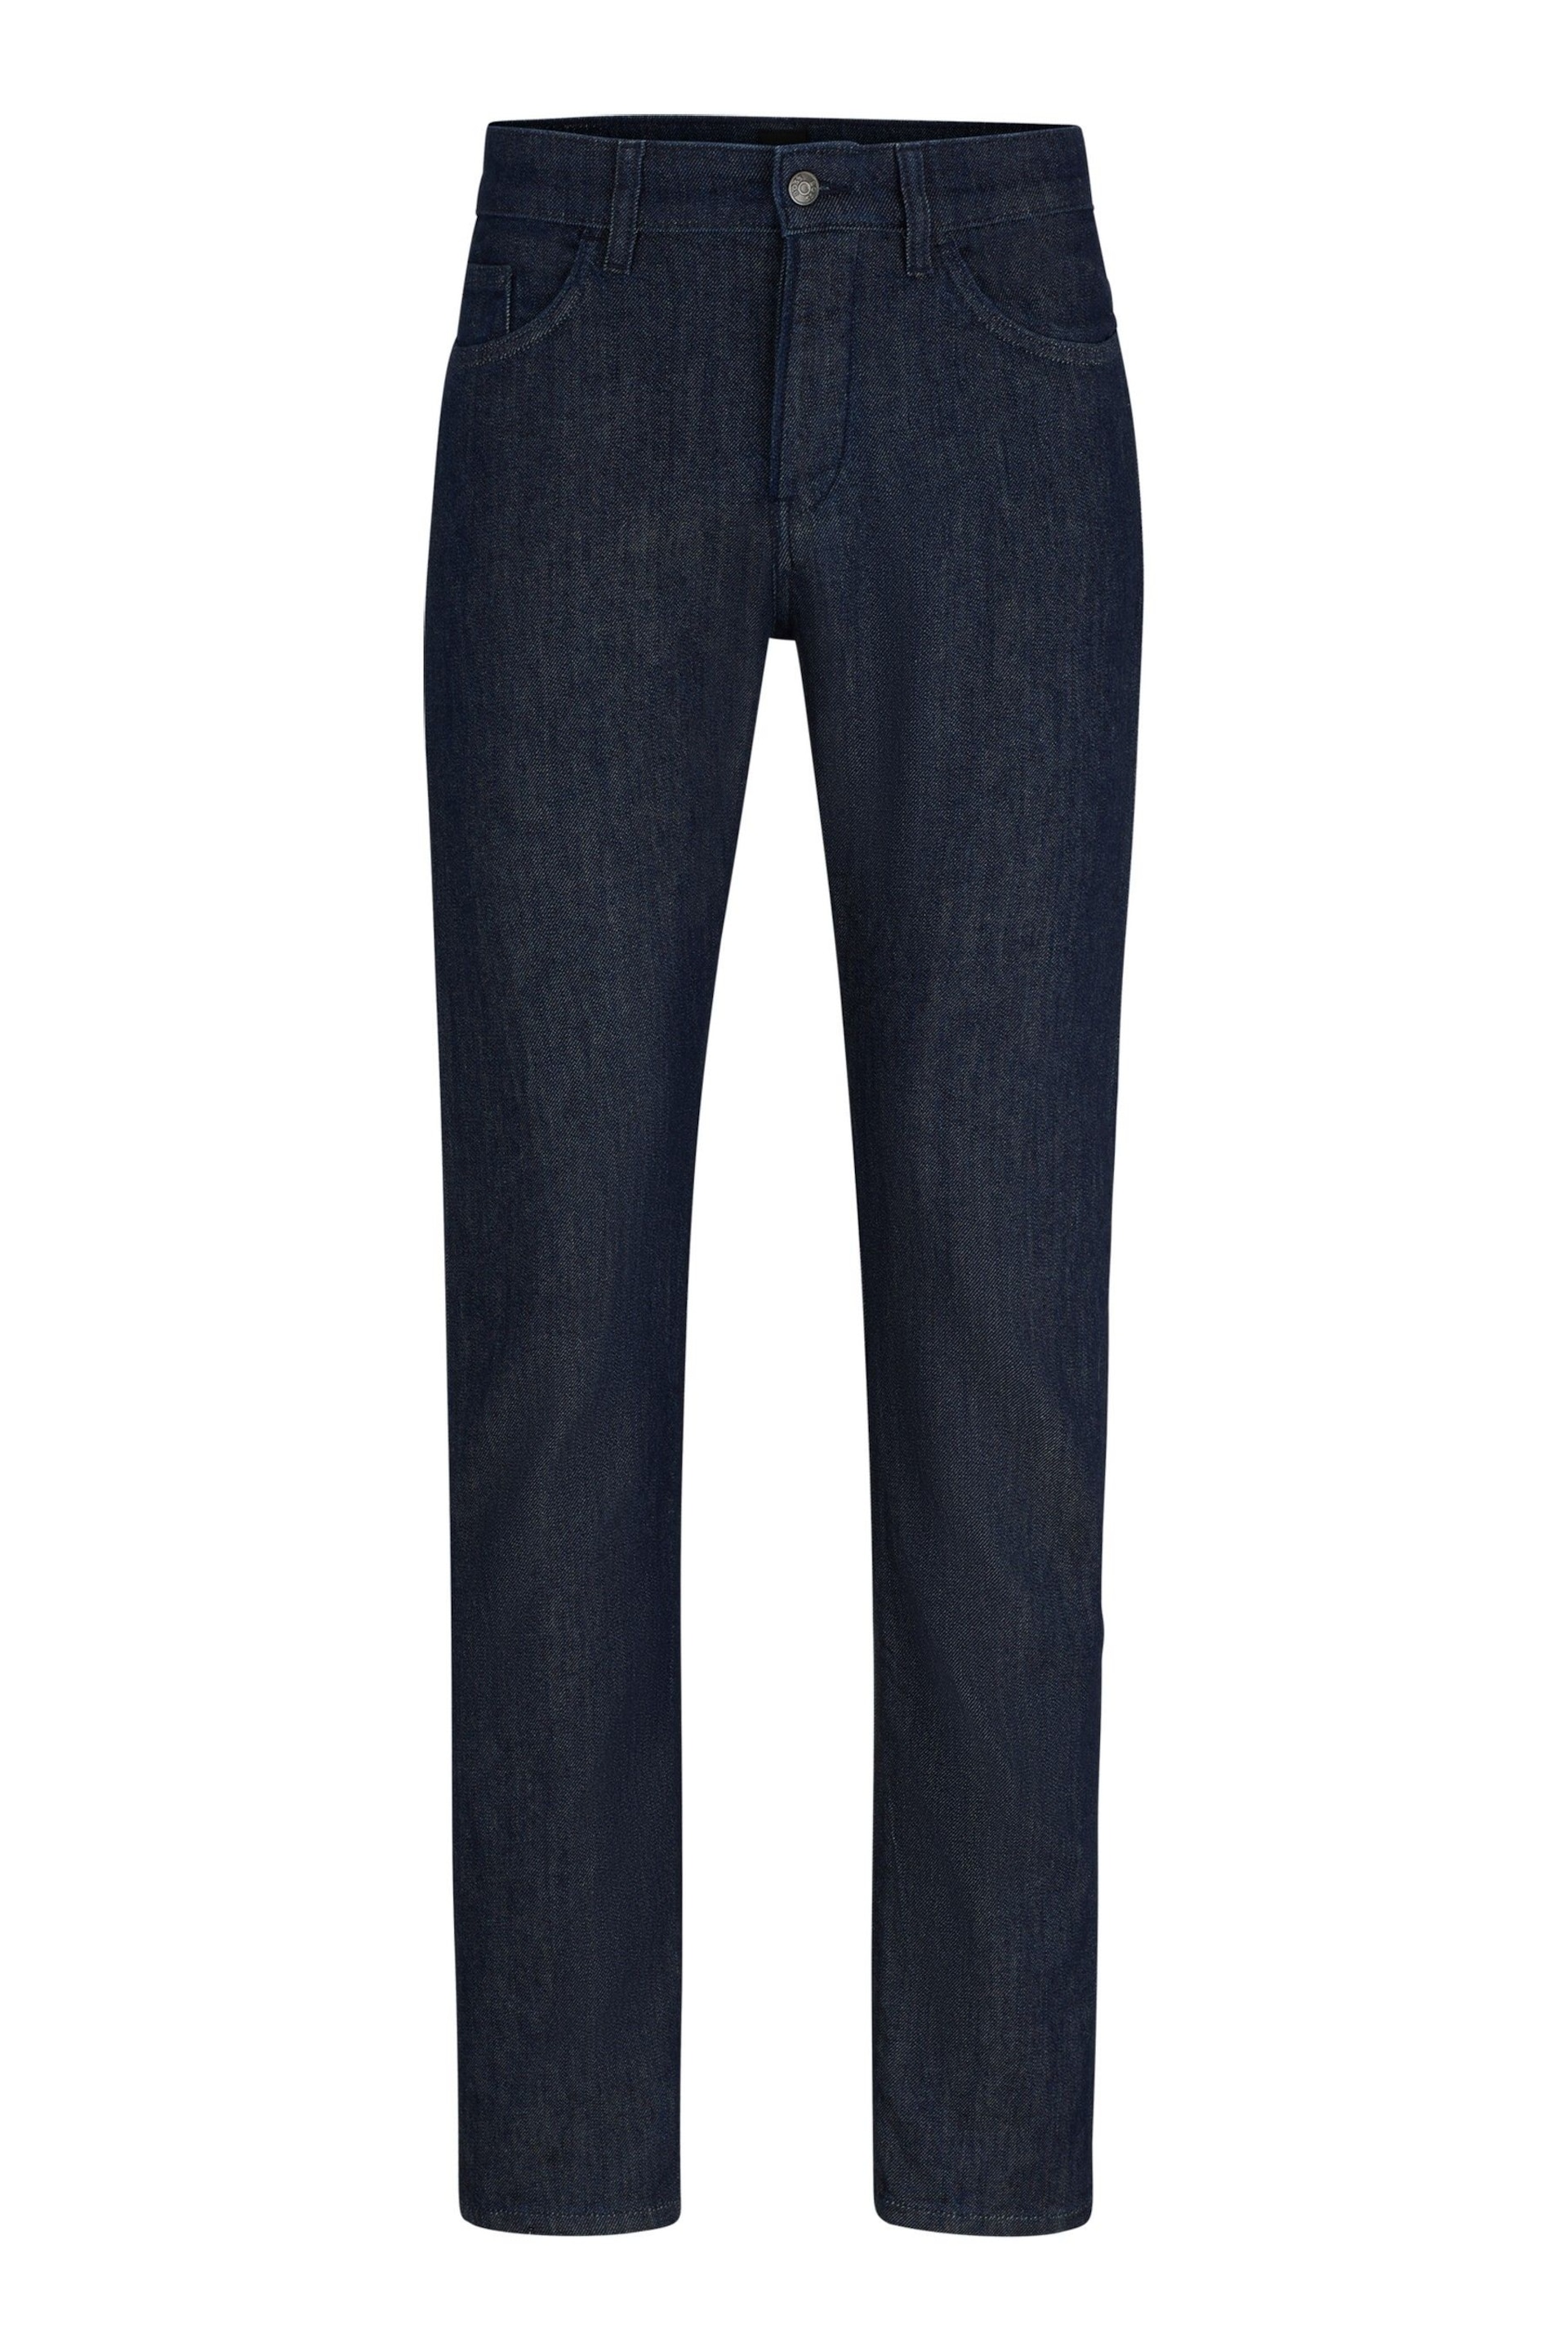 BOSS Dark Indgio Wash Delaware Slim Fit Jeans - Image 5 of 5